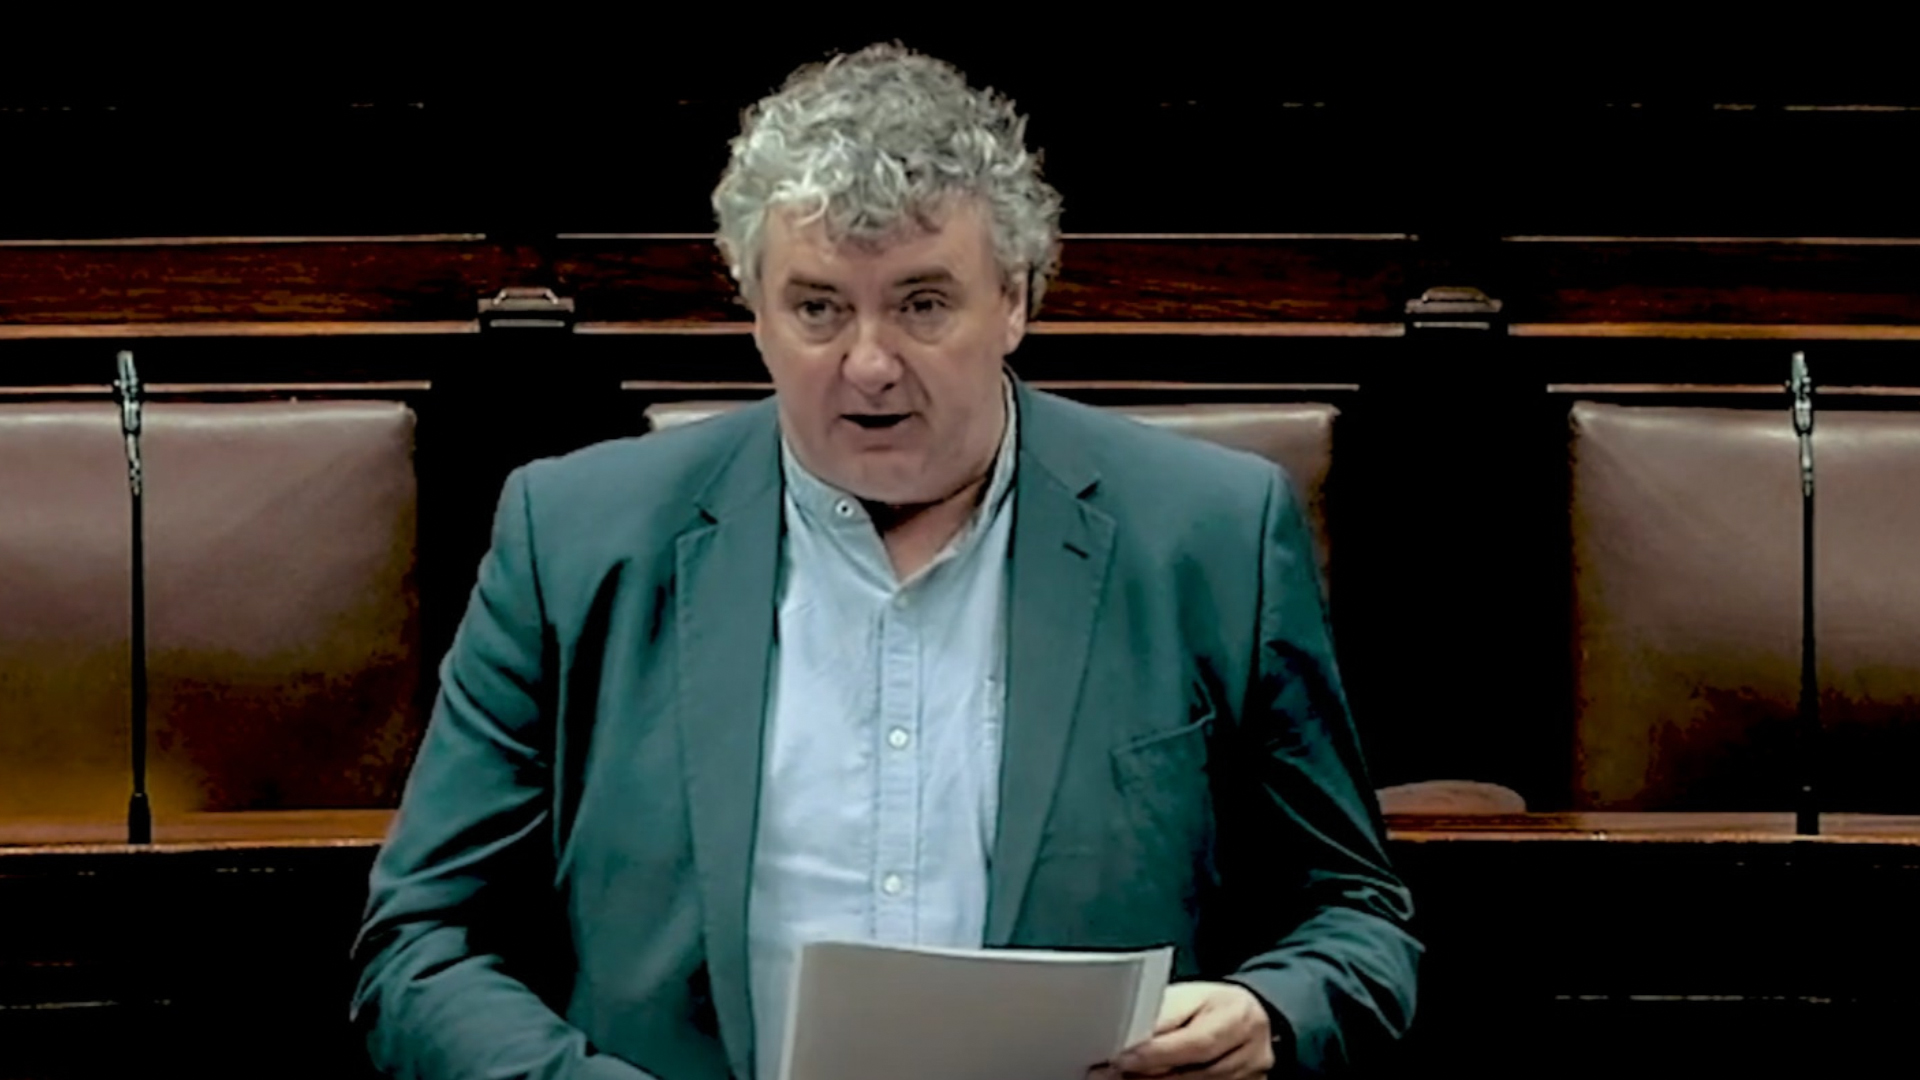 Independent Donegal TD slams Simon Harris for TikTok antics - Gript